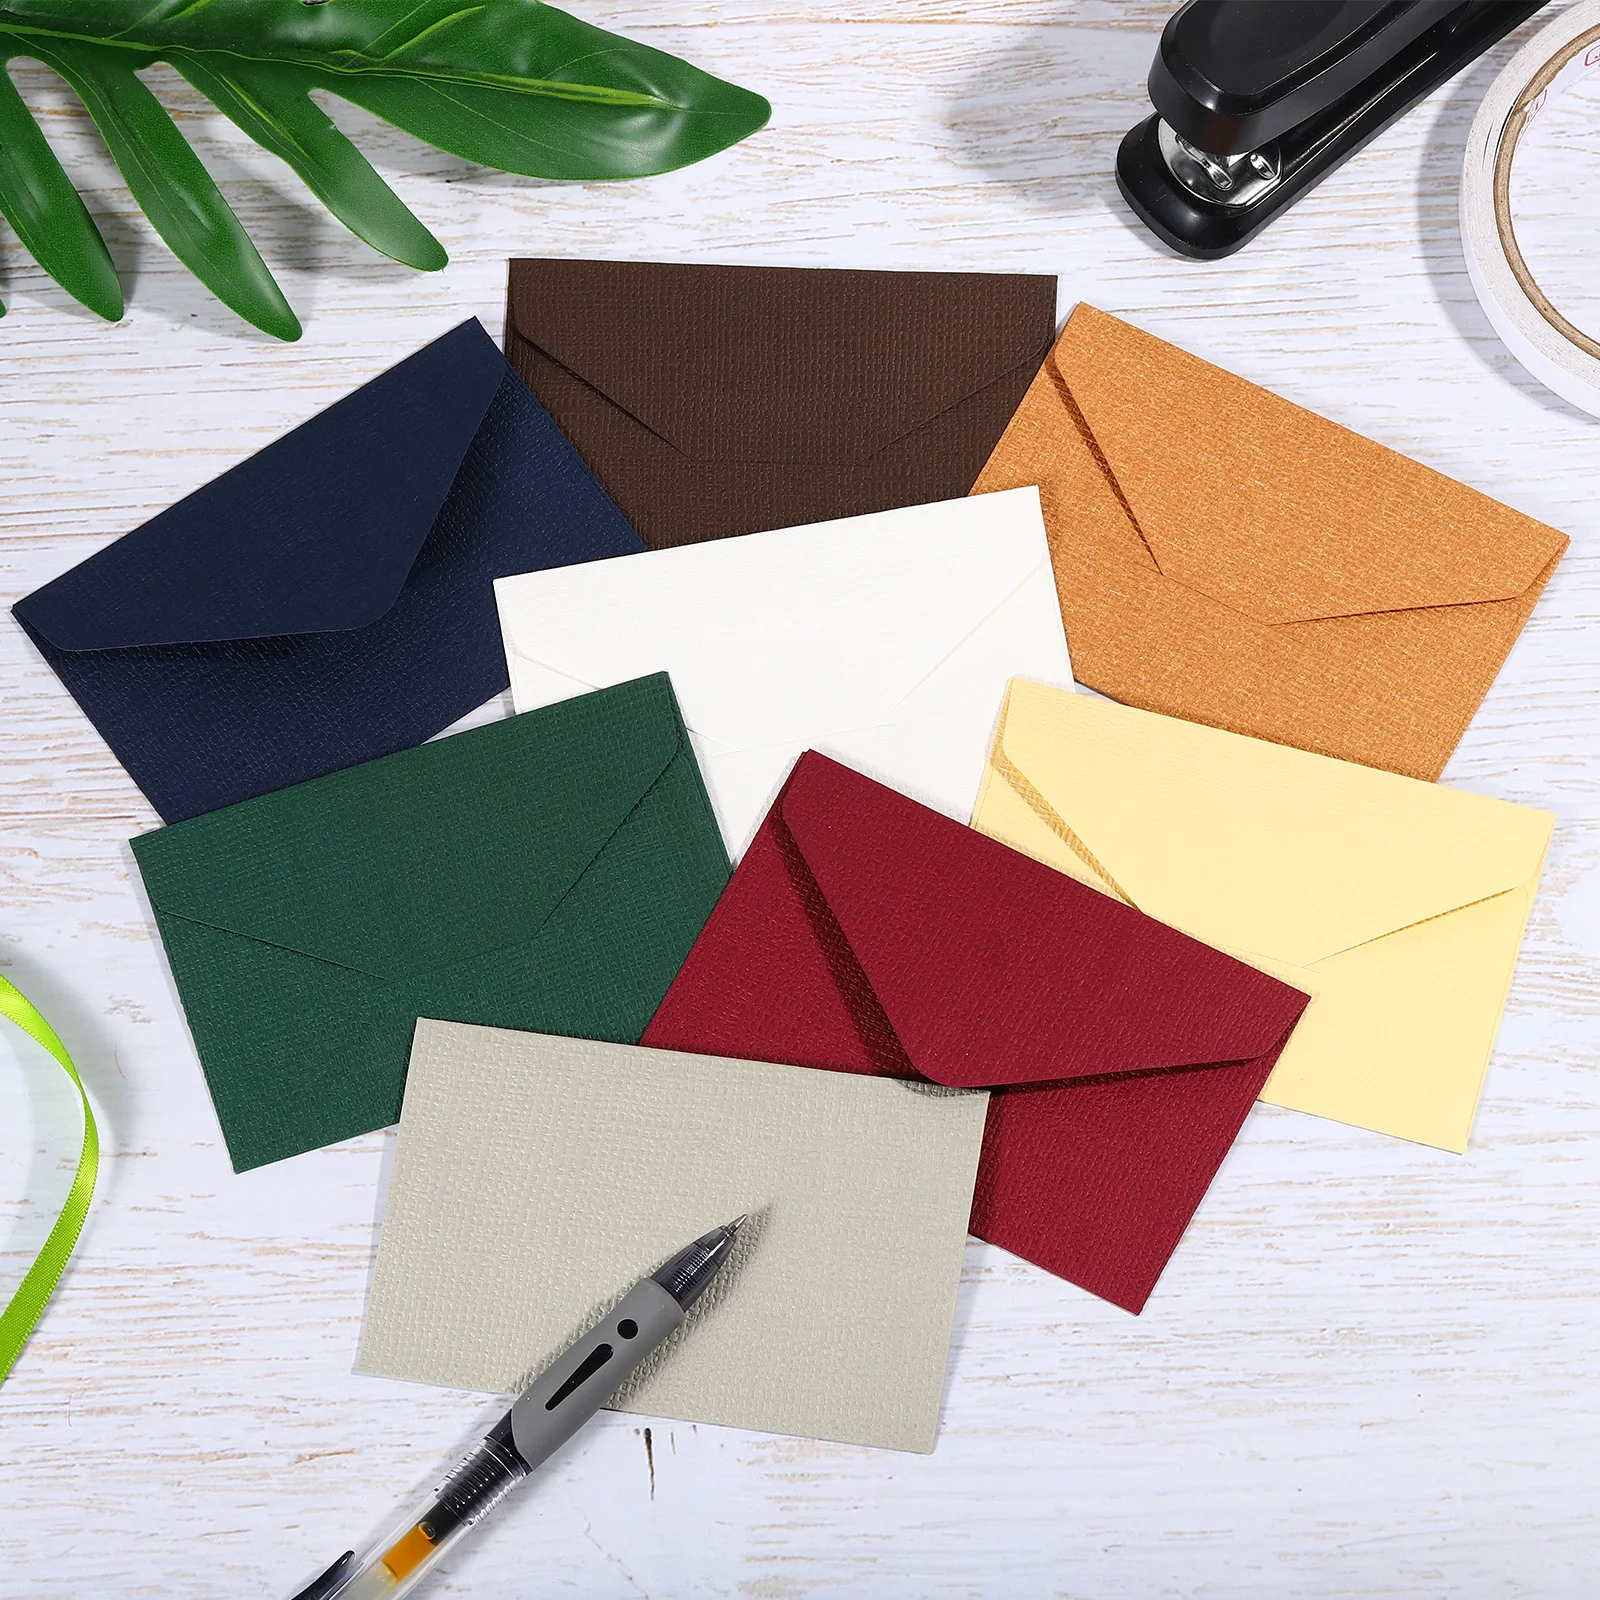 

20Pcs 10.5x7cm Mini Paper Envelopes Linen Textured Retro Envelope Bag for Wedding Party Invitation Greeting Cards Gift Envelopes